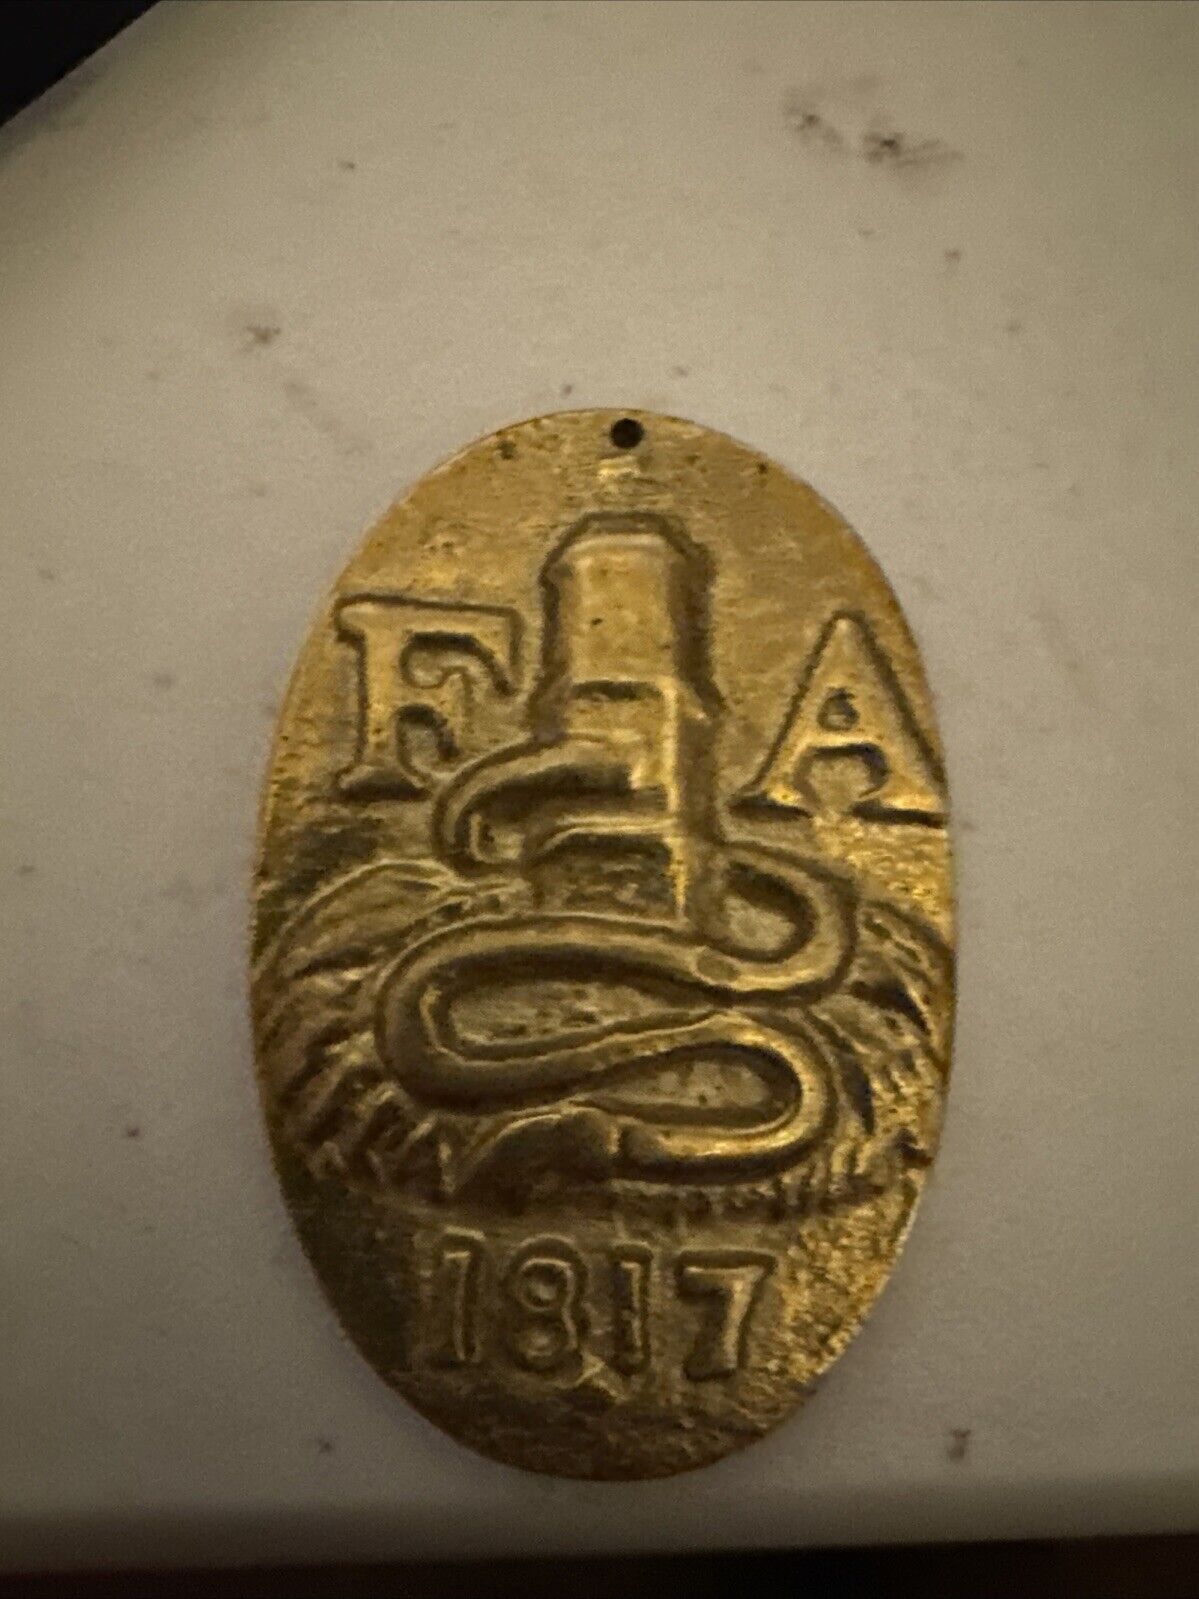 Early 1900's Fire Associates of Philadelphia Brass Badge